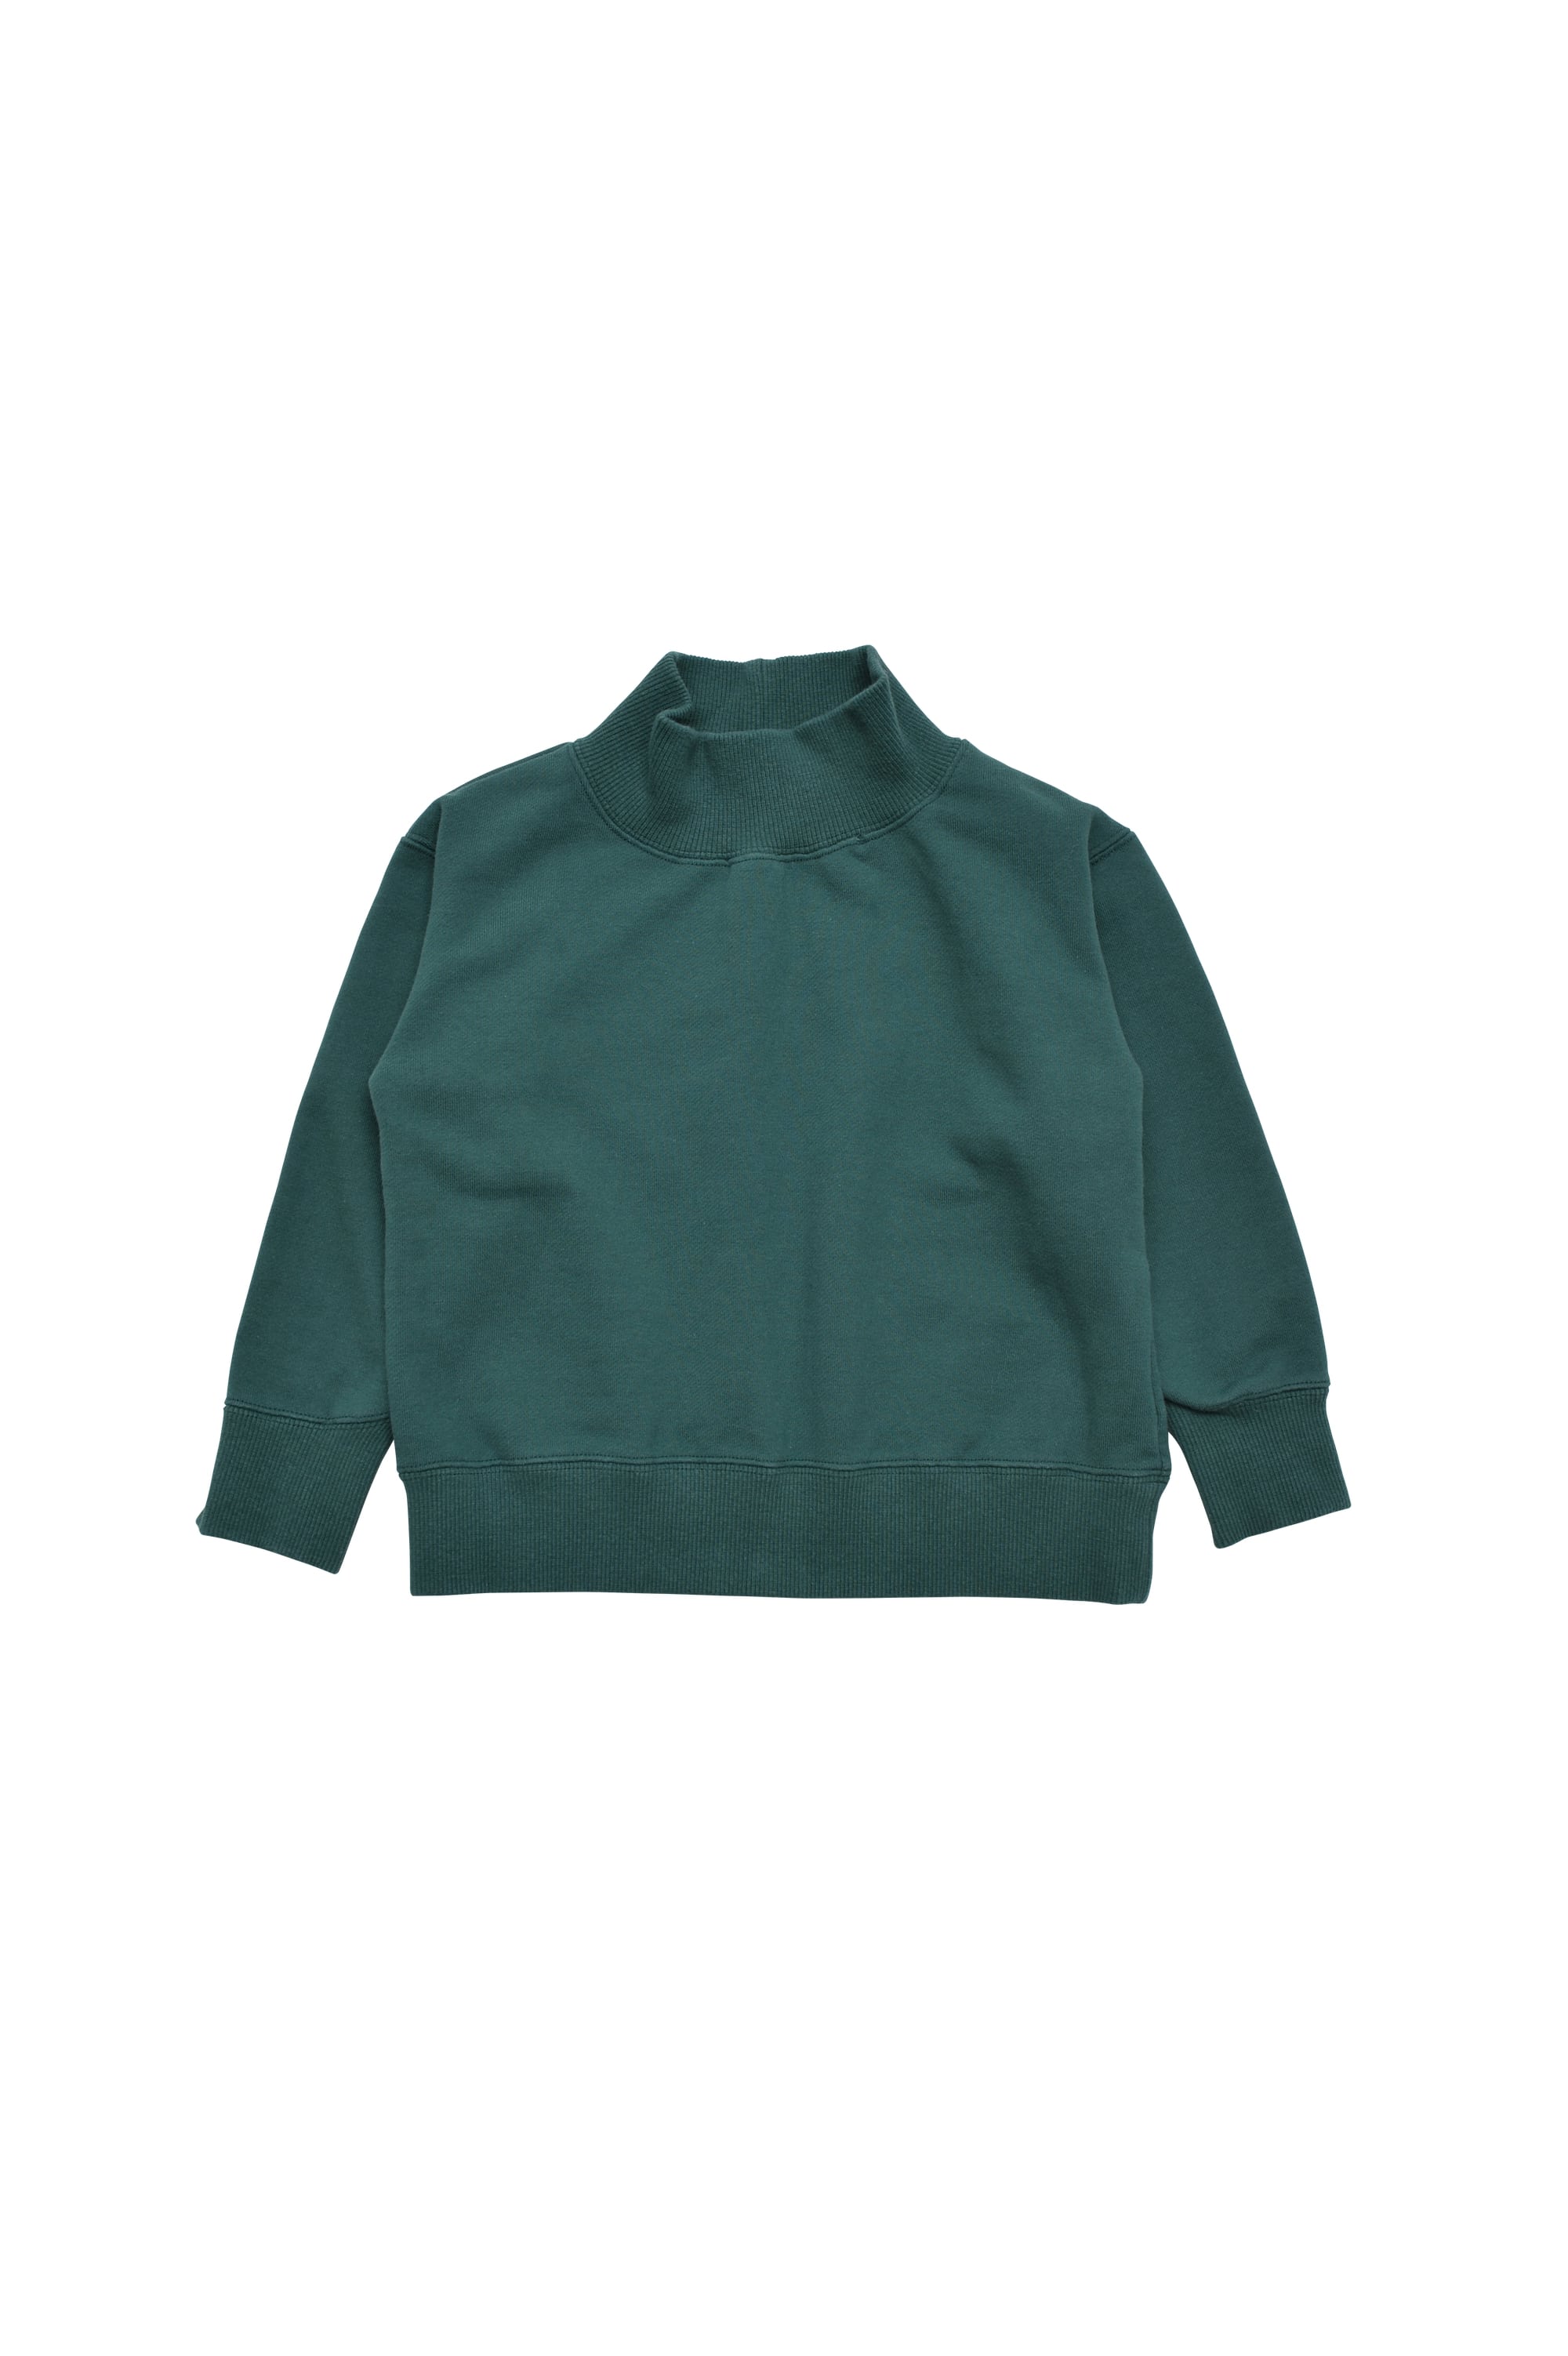 Girls Green Turtleneck Sweater